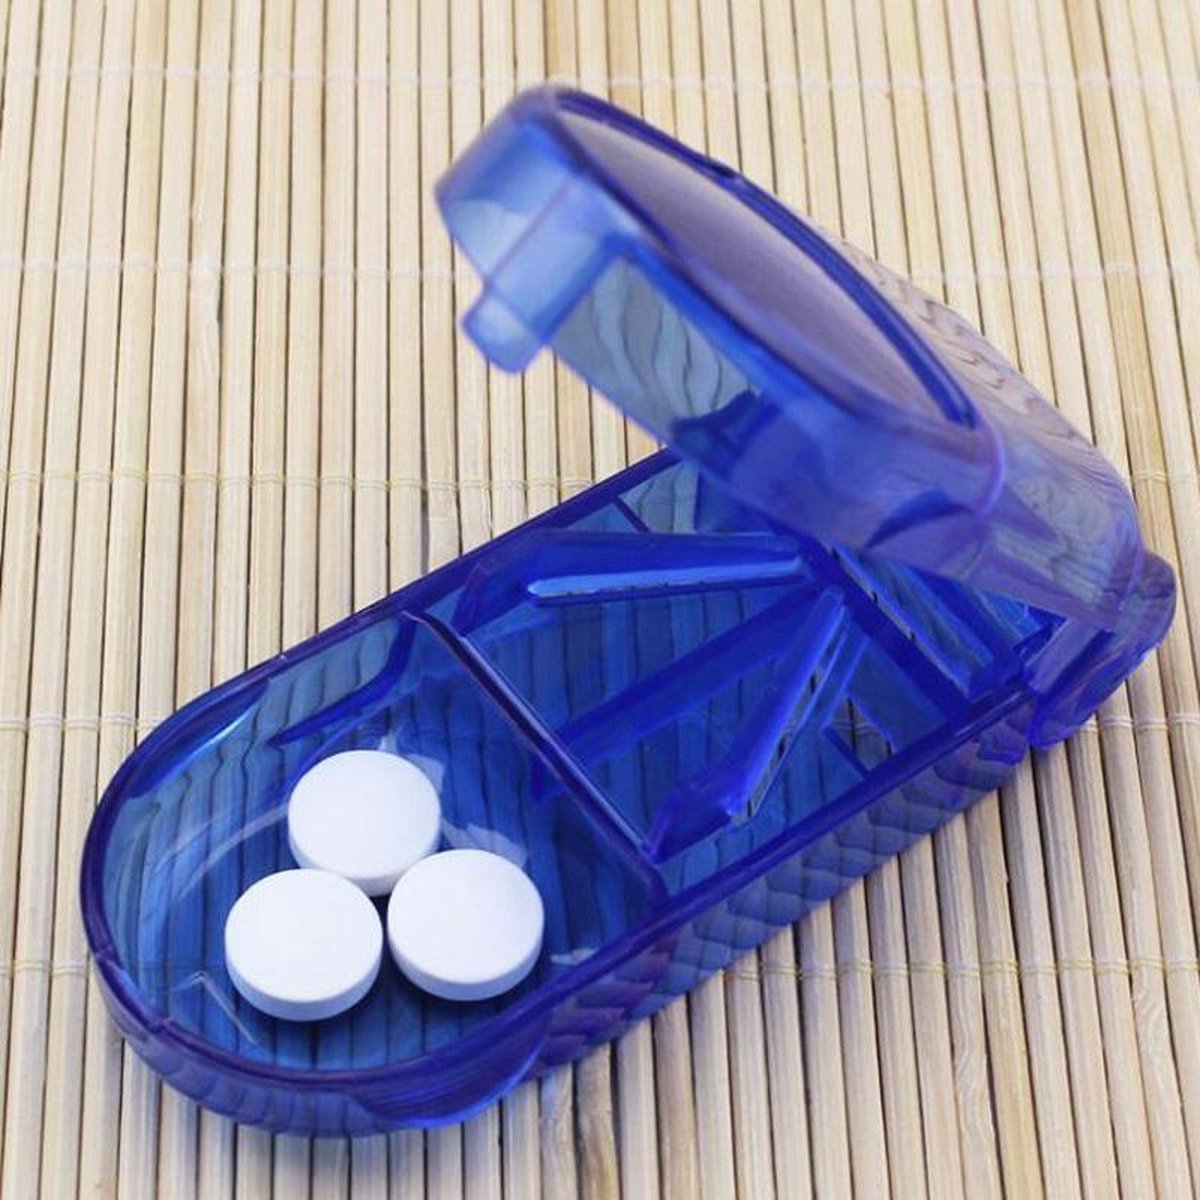 Medicca - Pillensnijder - Pillensplitter - Pillendeler - Medicijnsnijder - Medicijnen Organizer - Tablettensplitter - Blauw